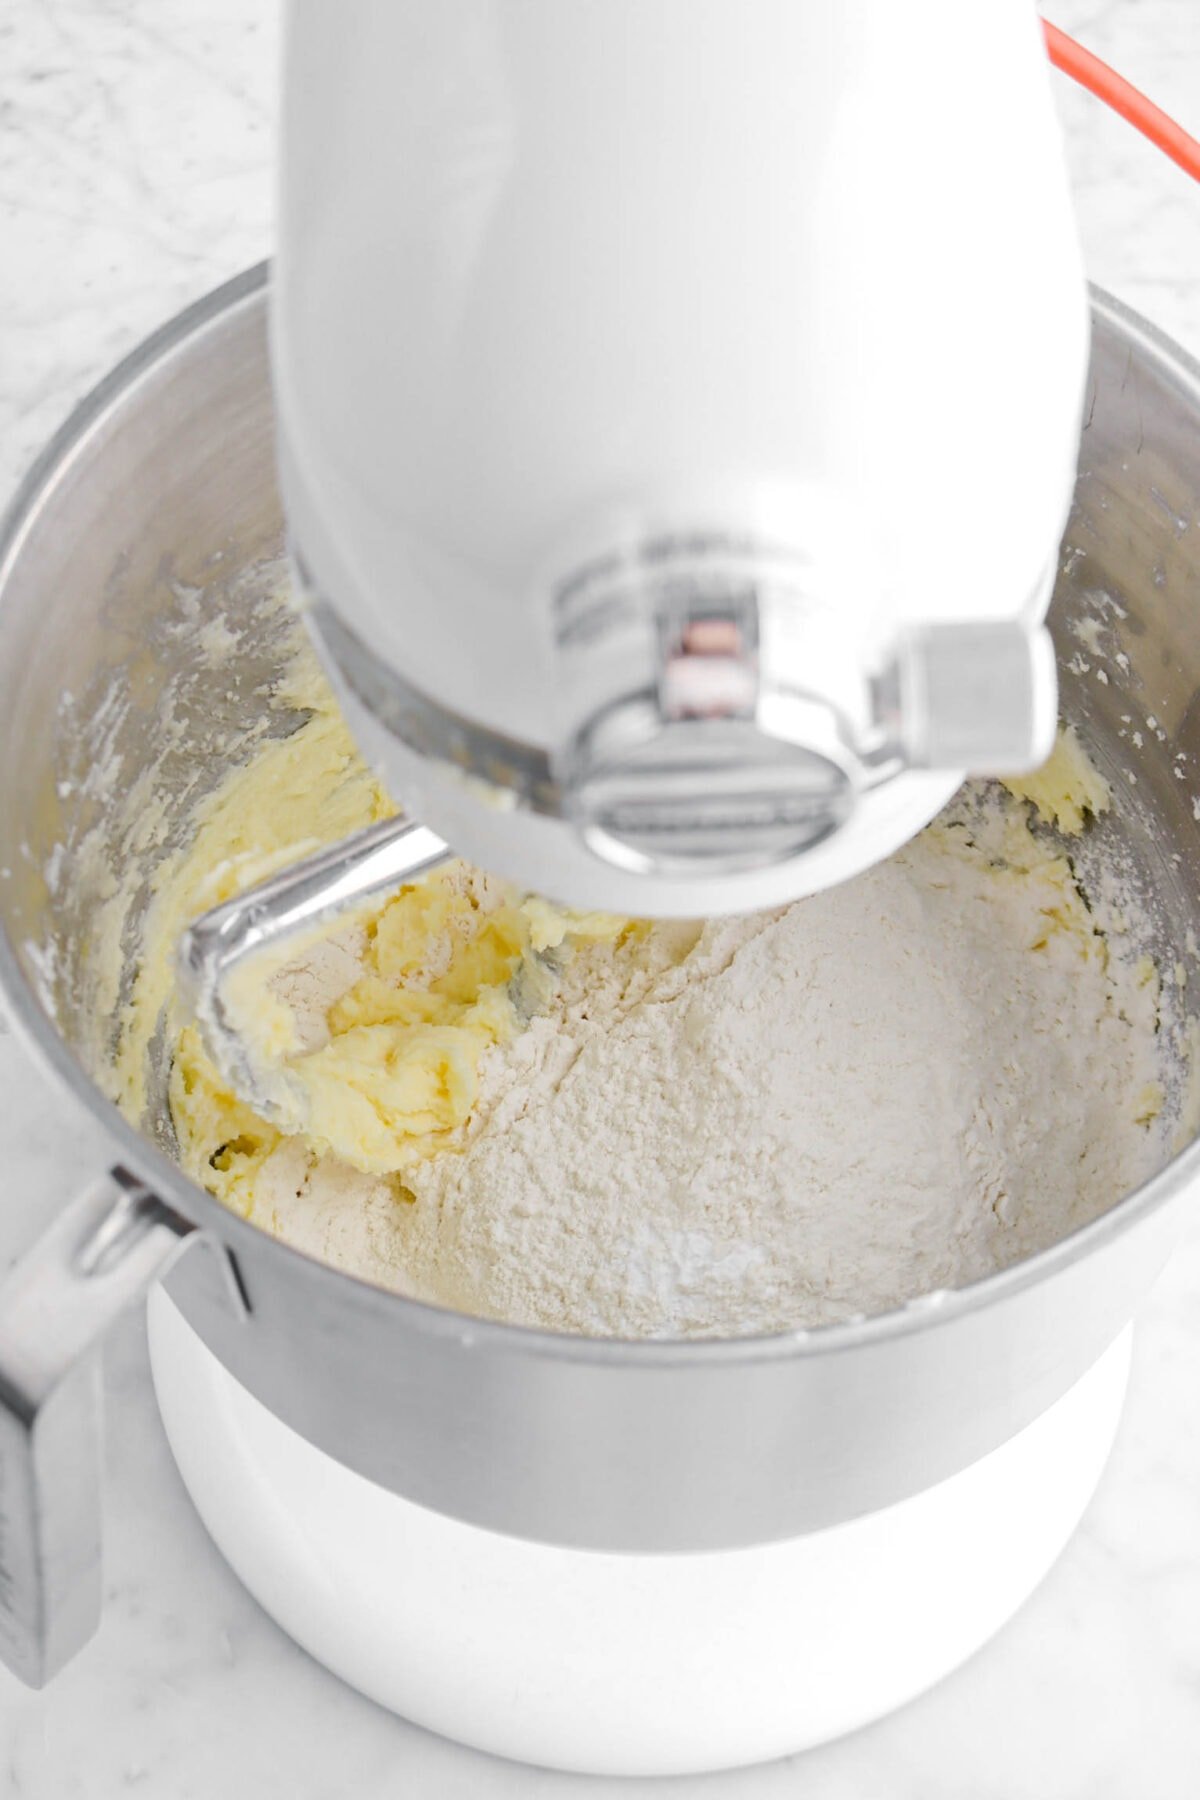 flour added to butter mixture.